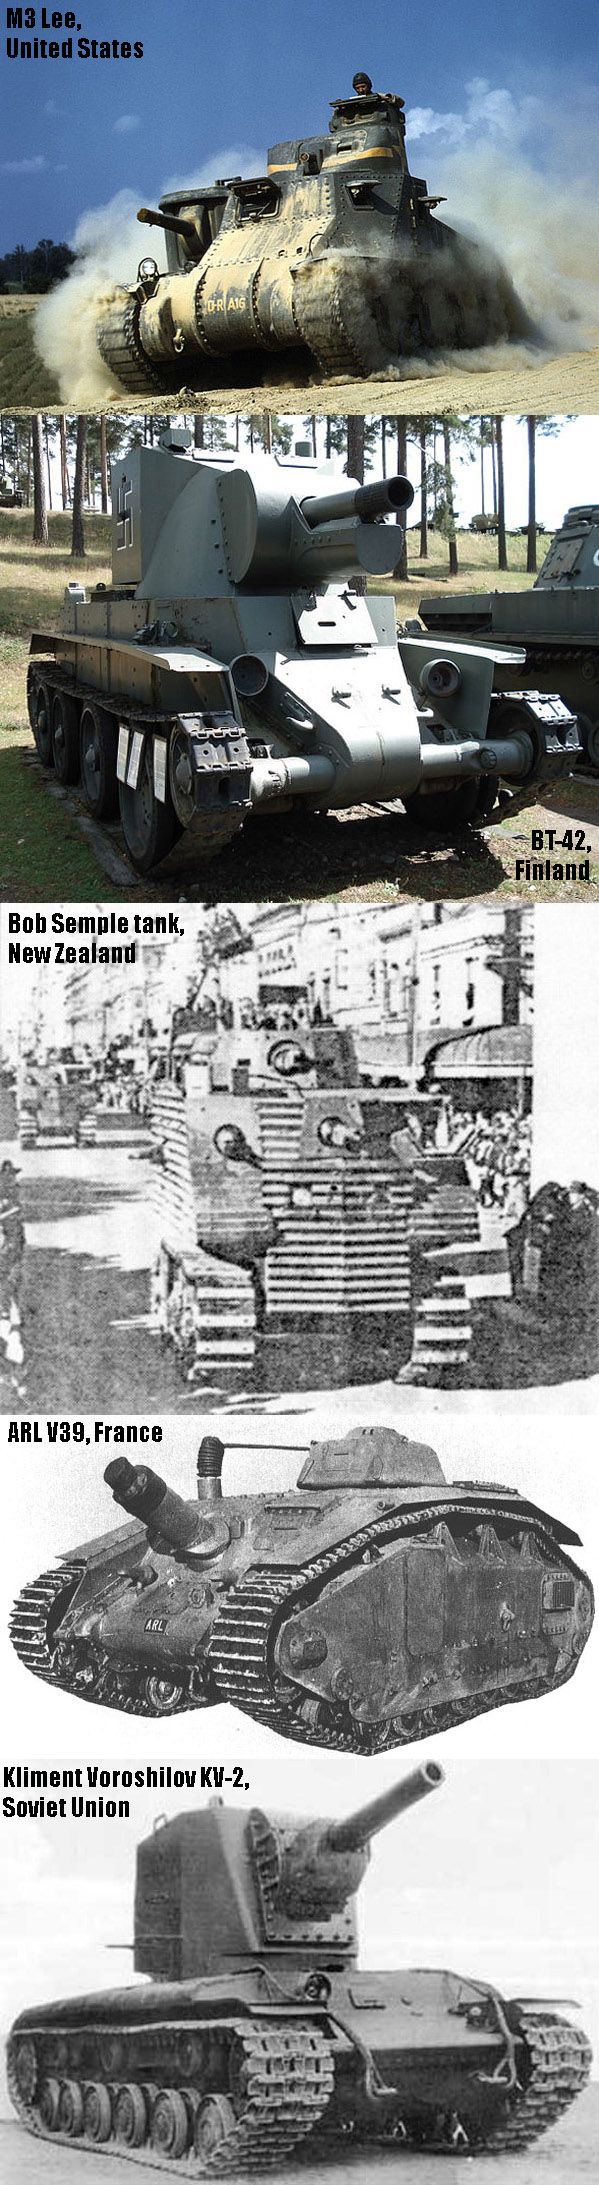 The Ugliest Tanks Of World War II